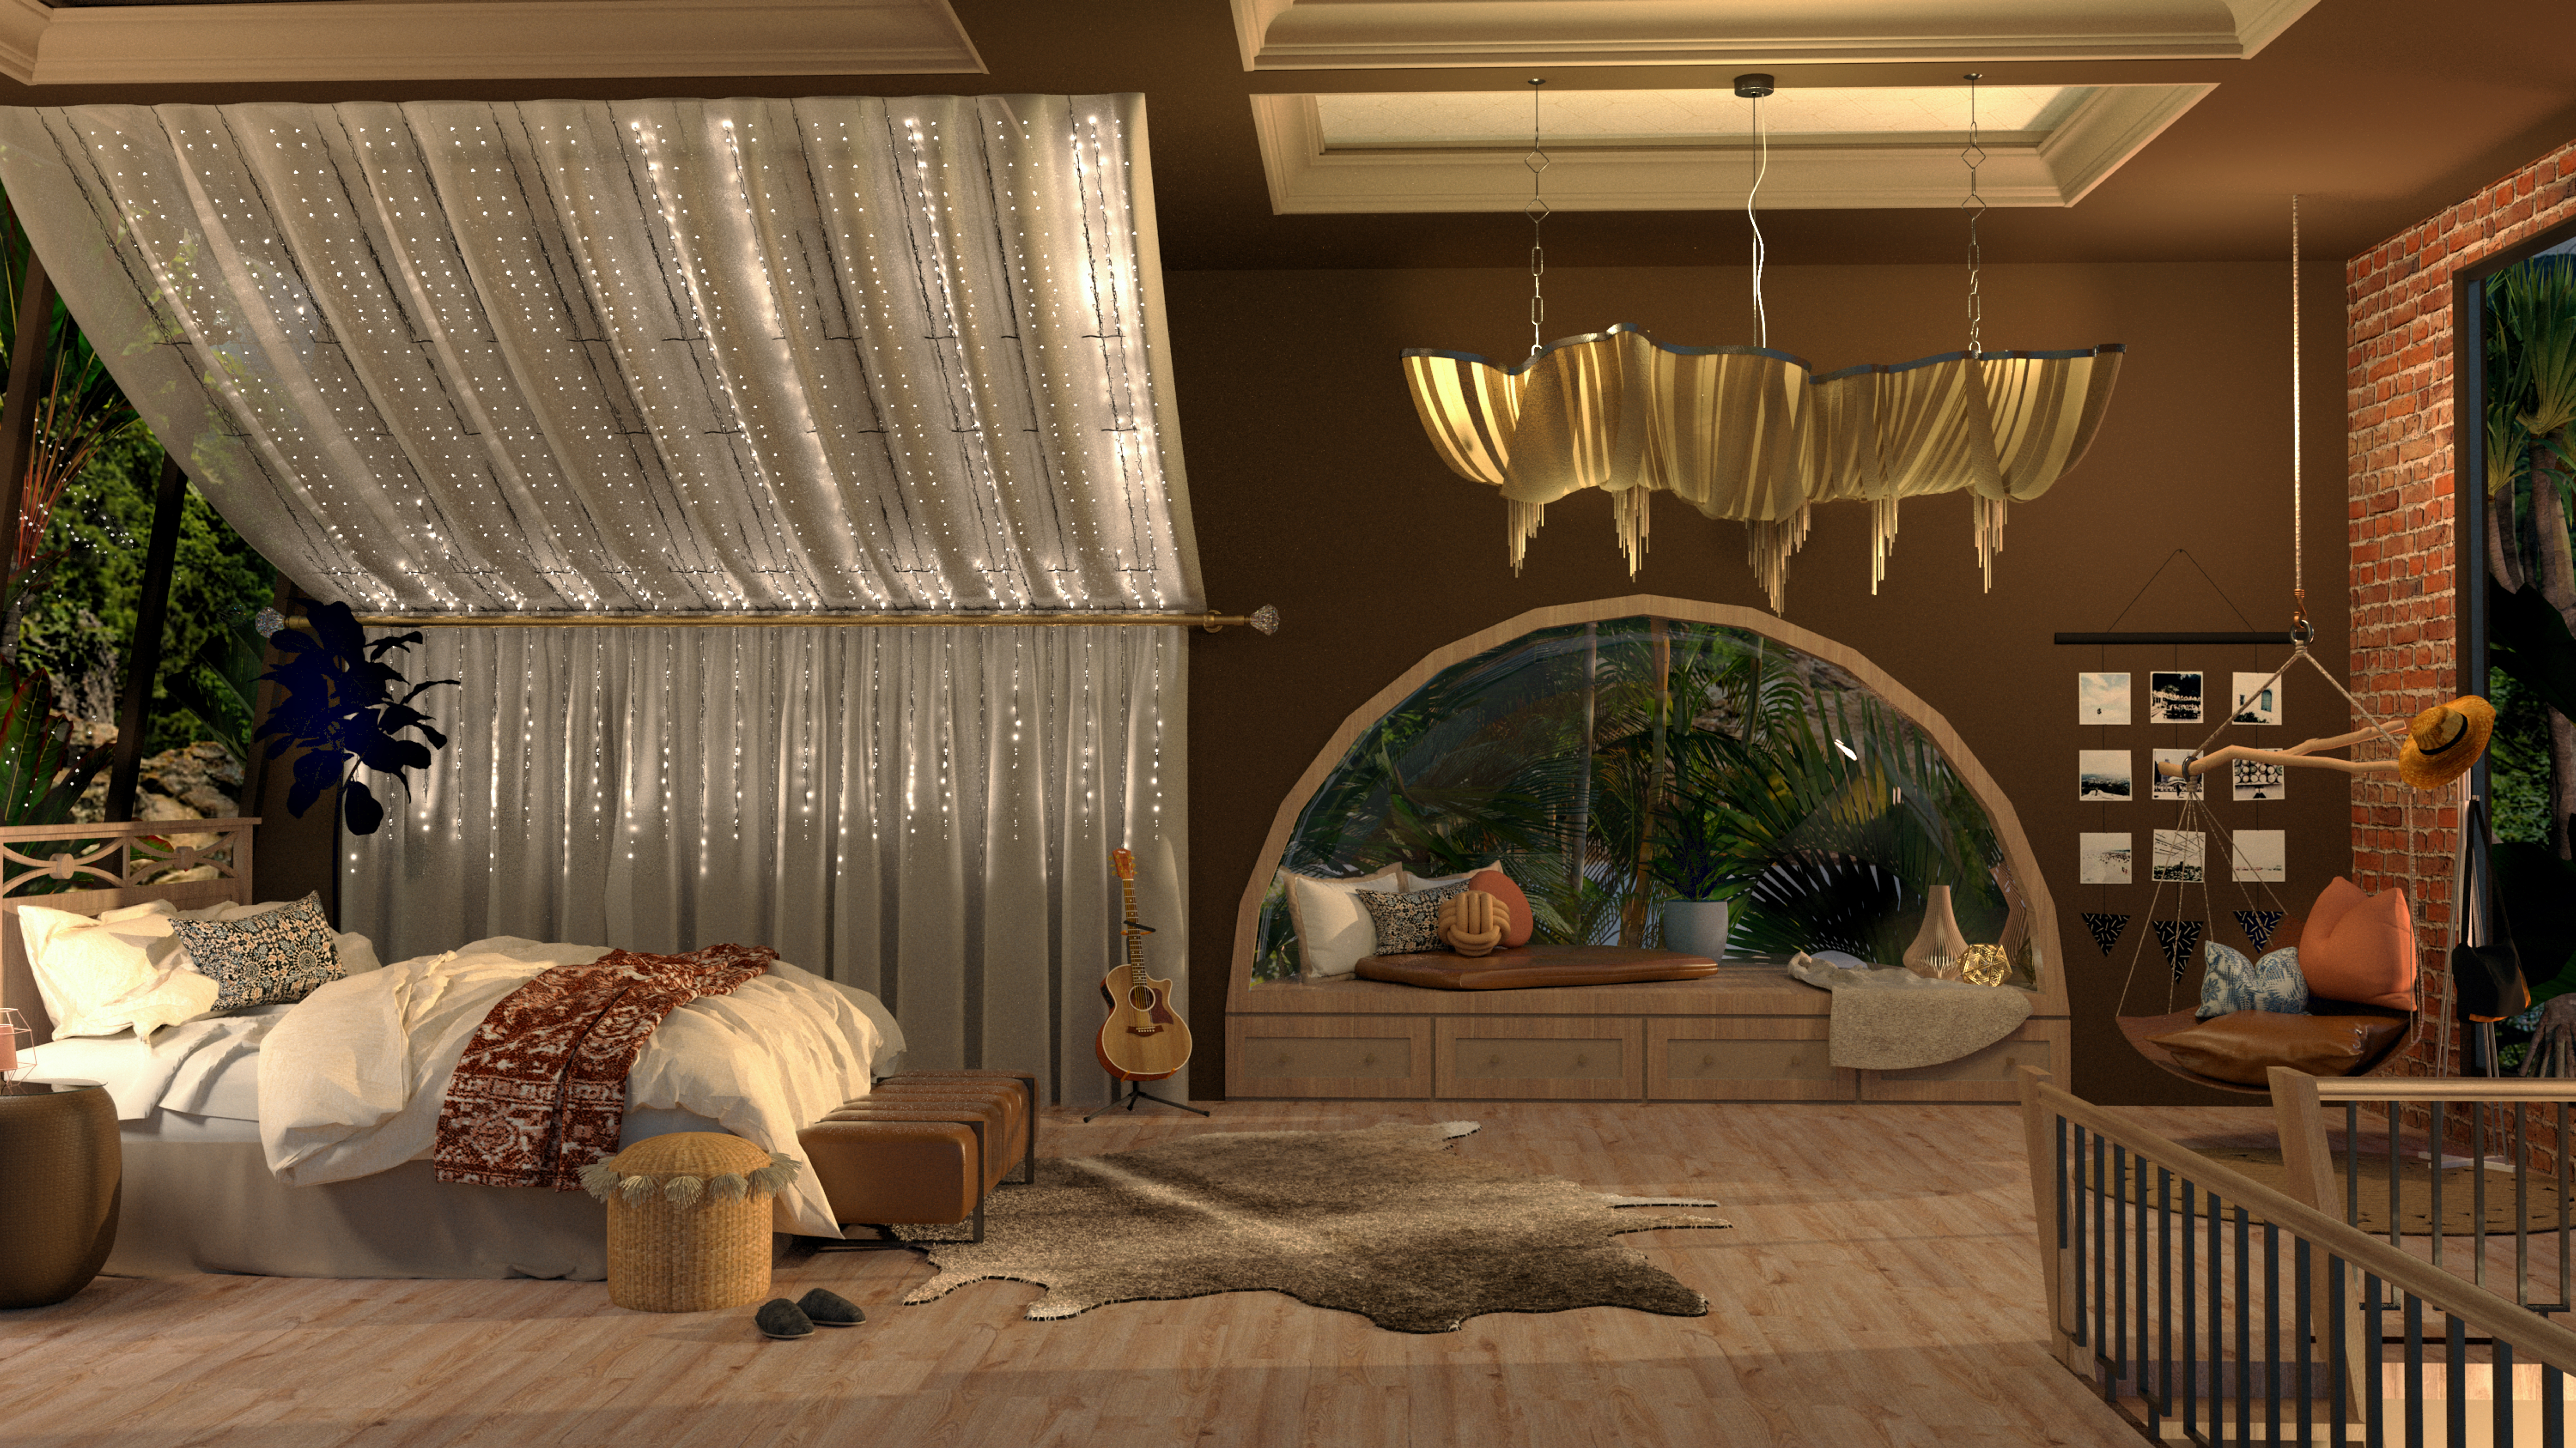 "Wanderer" bedroom rendering by Samantha Kragel